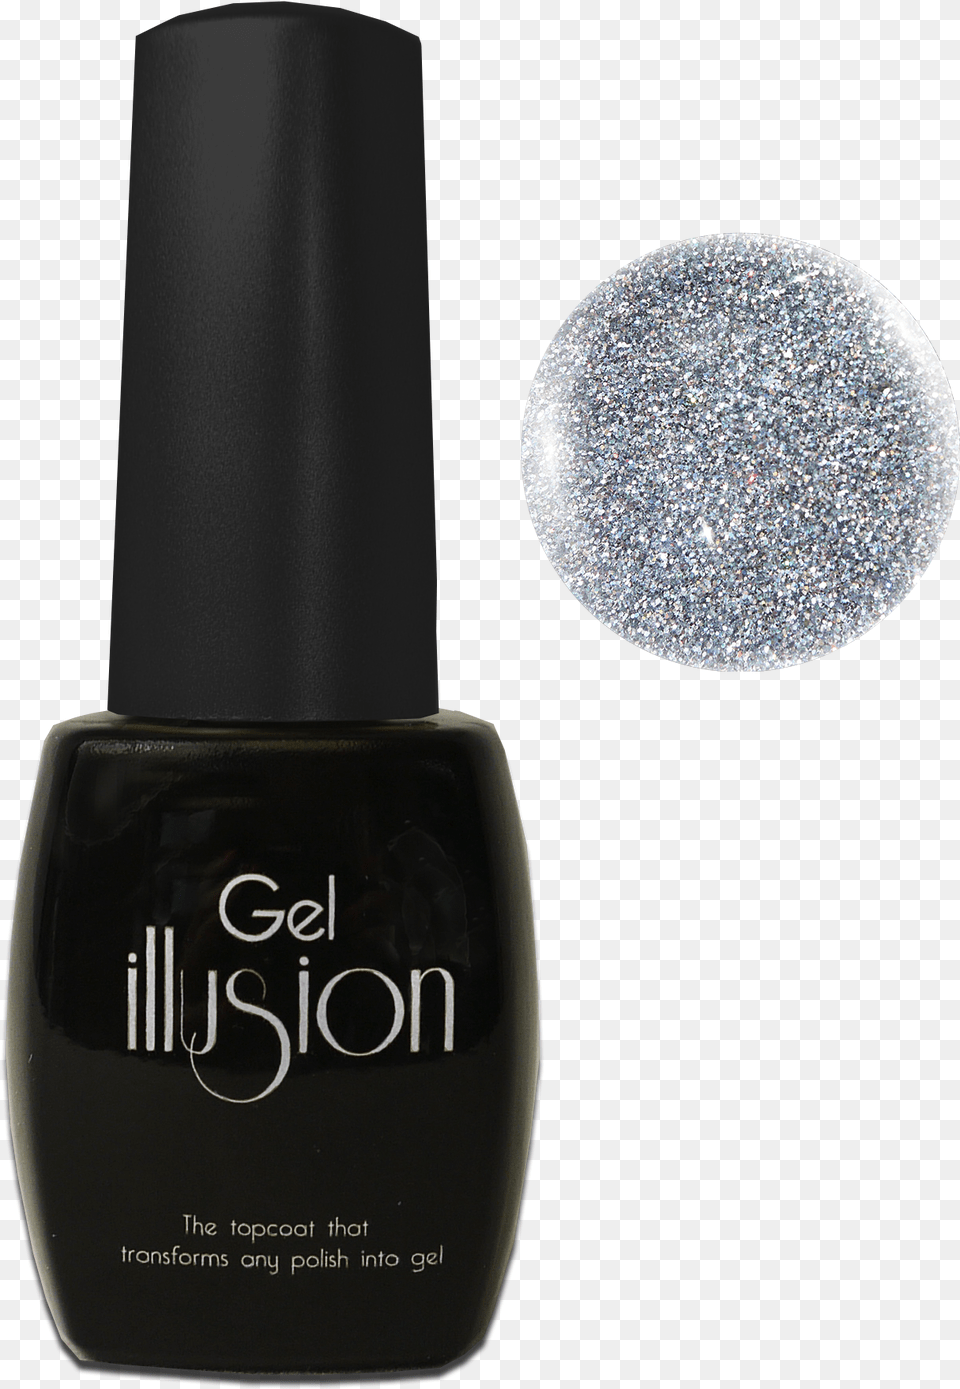 Star Gel Illusion Silver Glitter Top Coat 14ml Restaurantes, Bottle, Cosmetics, Perfume, Astronomy Free Transparent Png